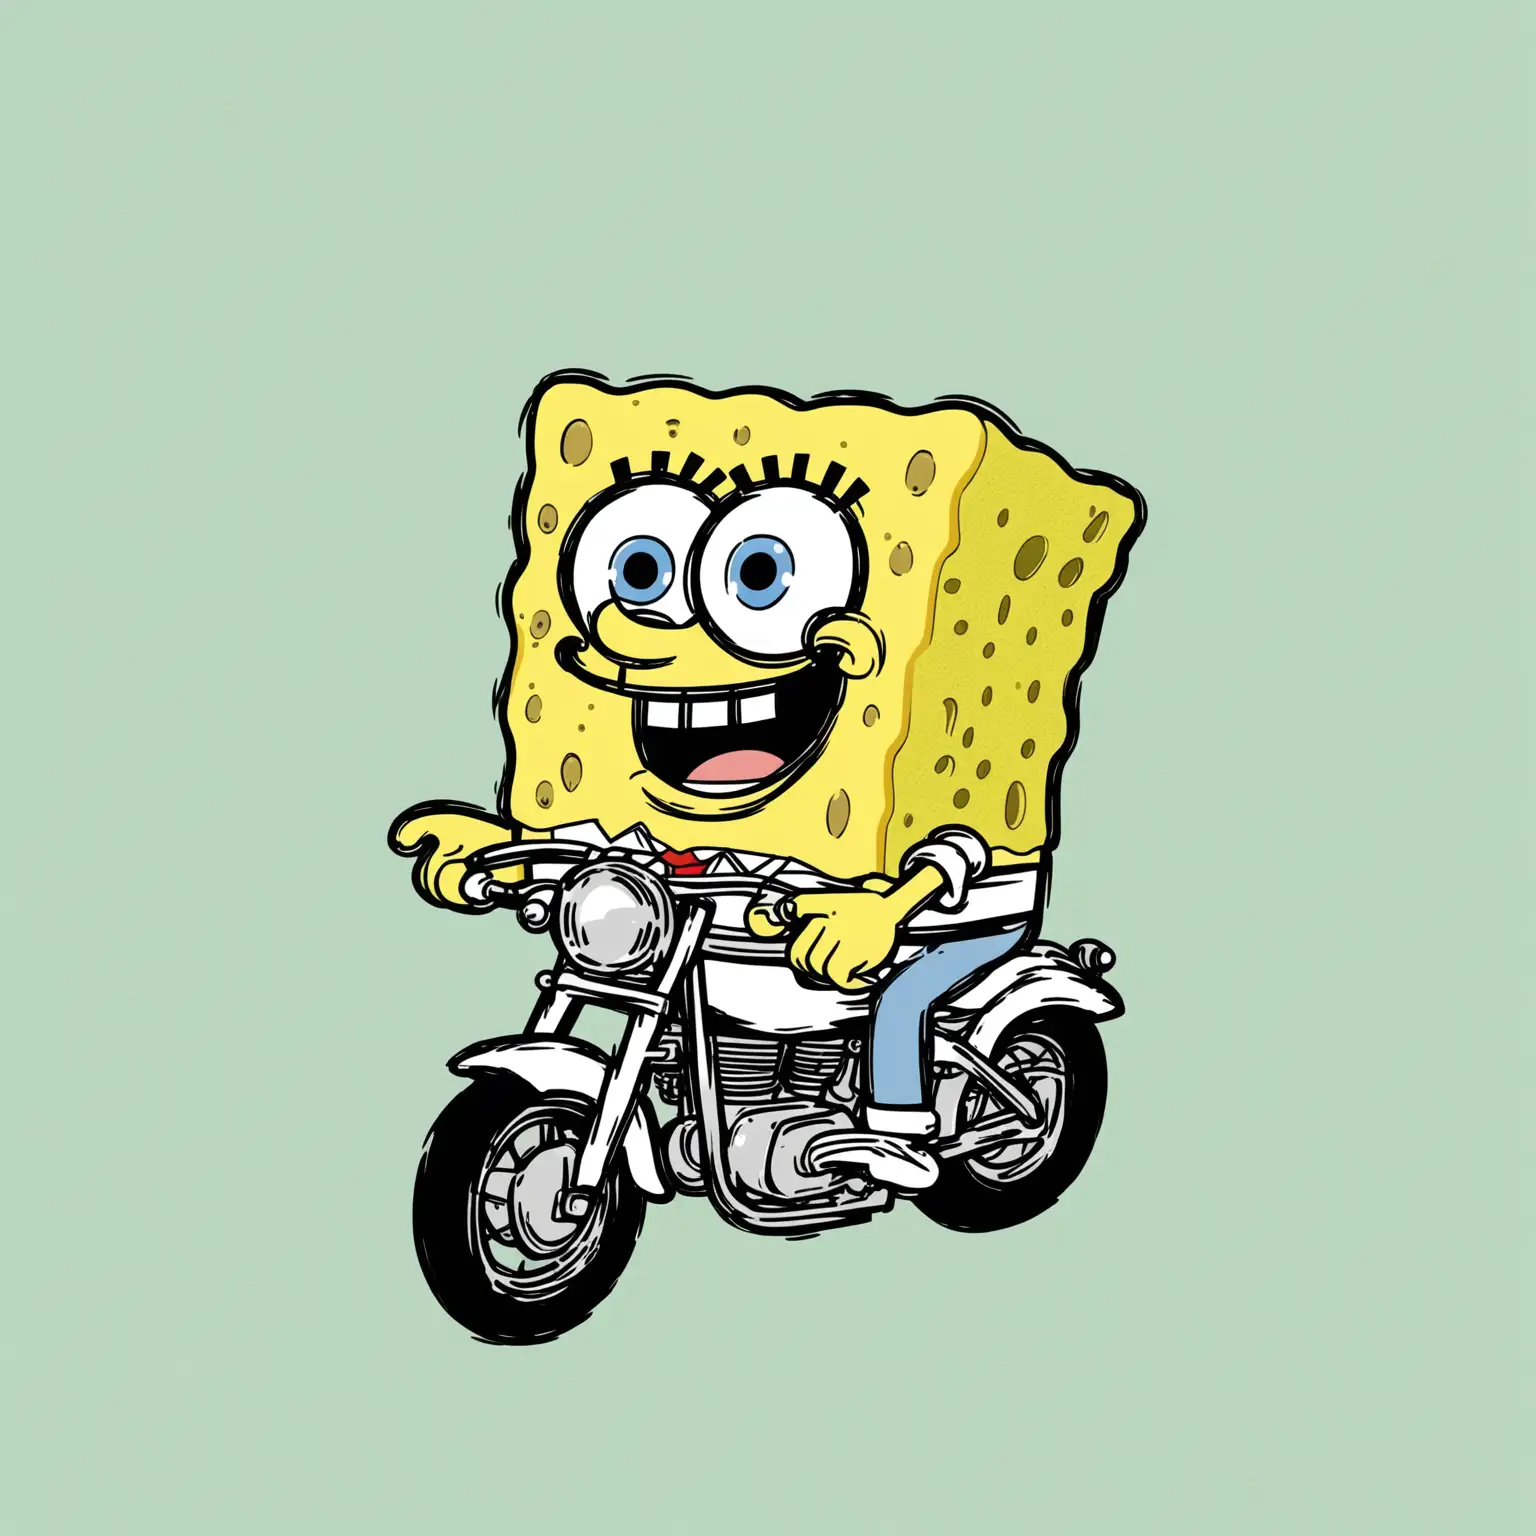 Sponge-Bob-Riding-Motorcycle-in-Minimalist-HandDrawn-Cartoon-Style